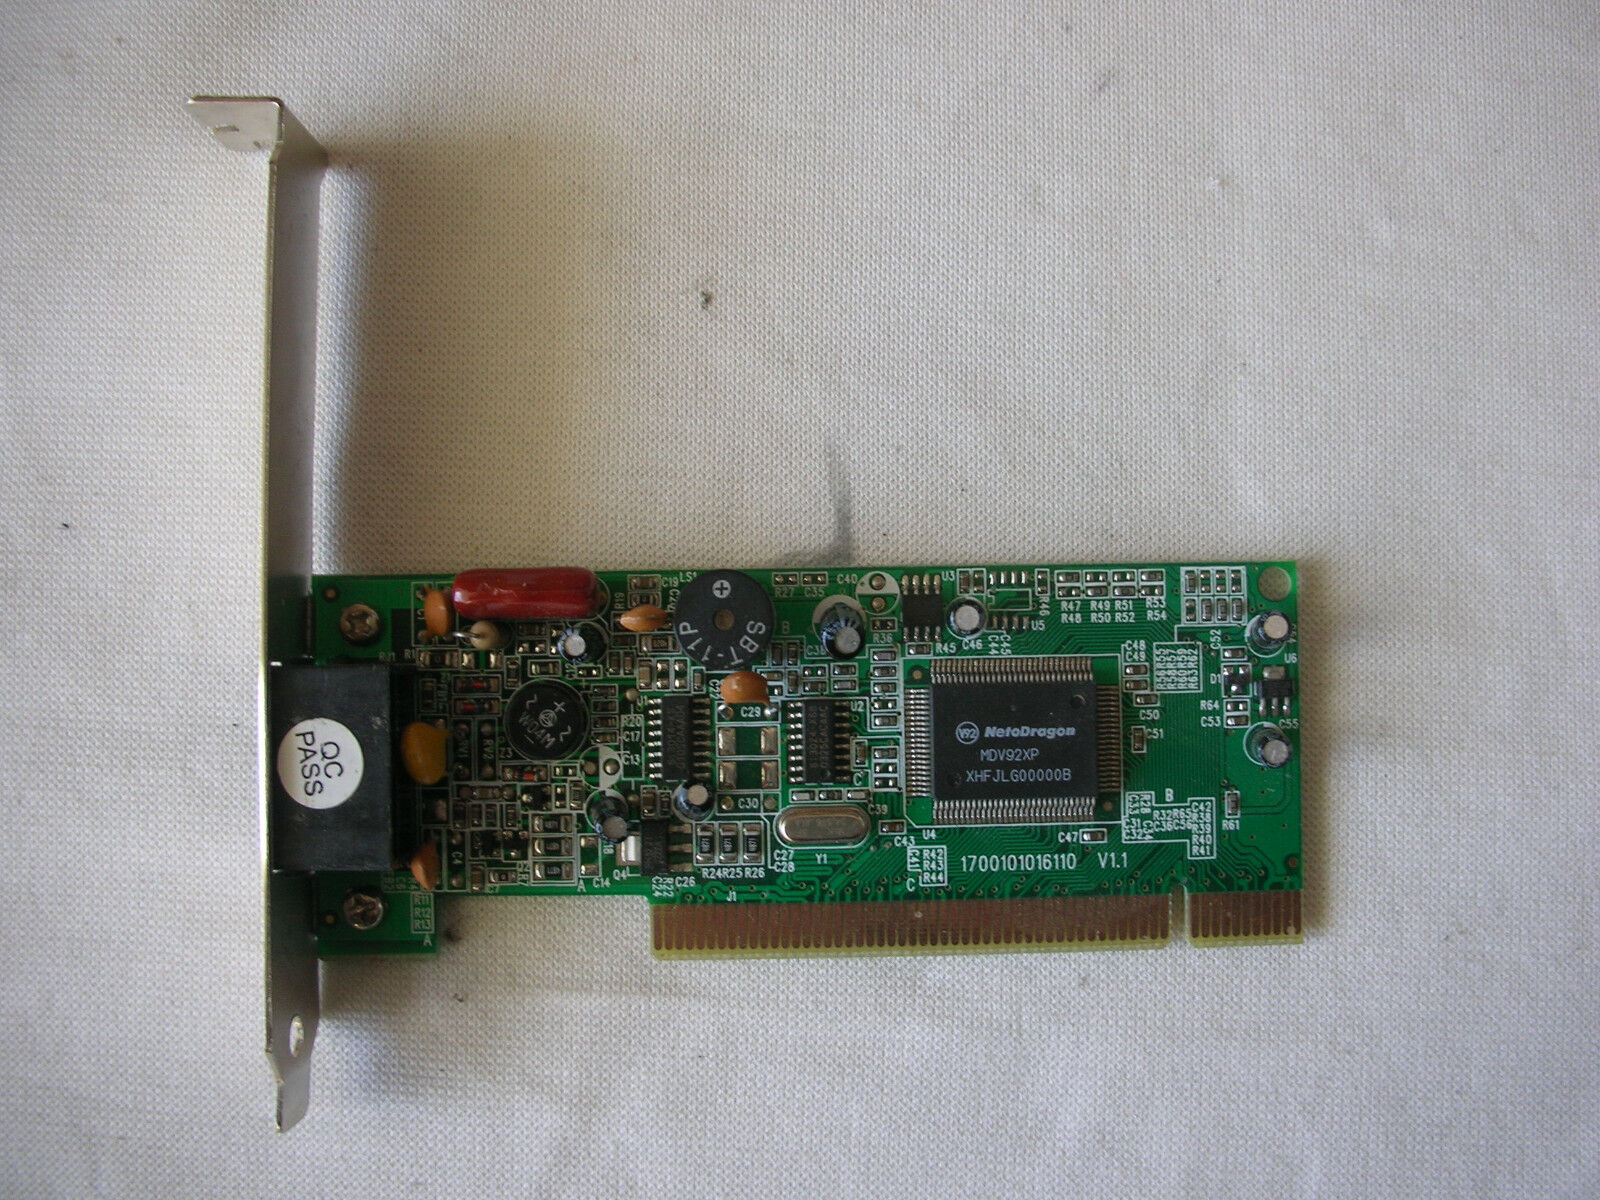 Netodragon MDV92XP 1700101016110 RJ11 56k Modem PCI